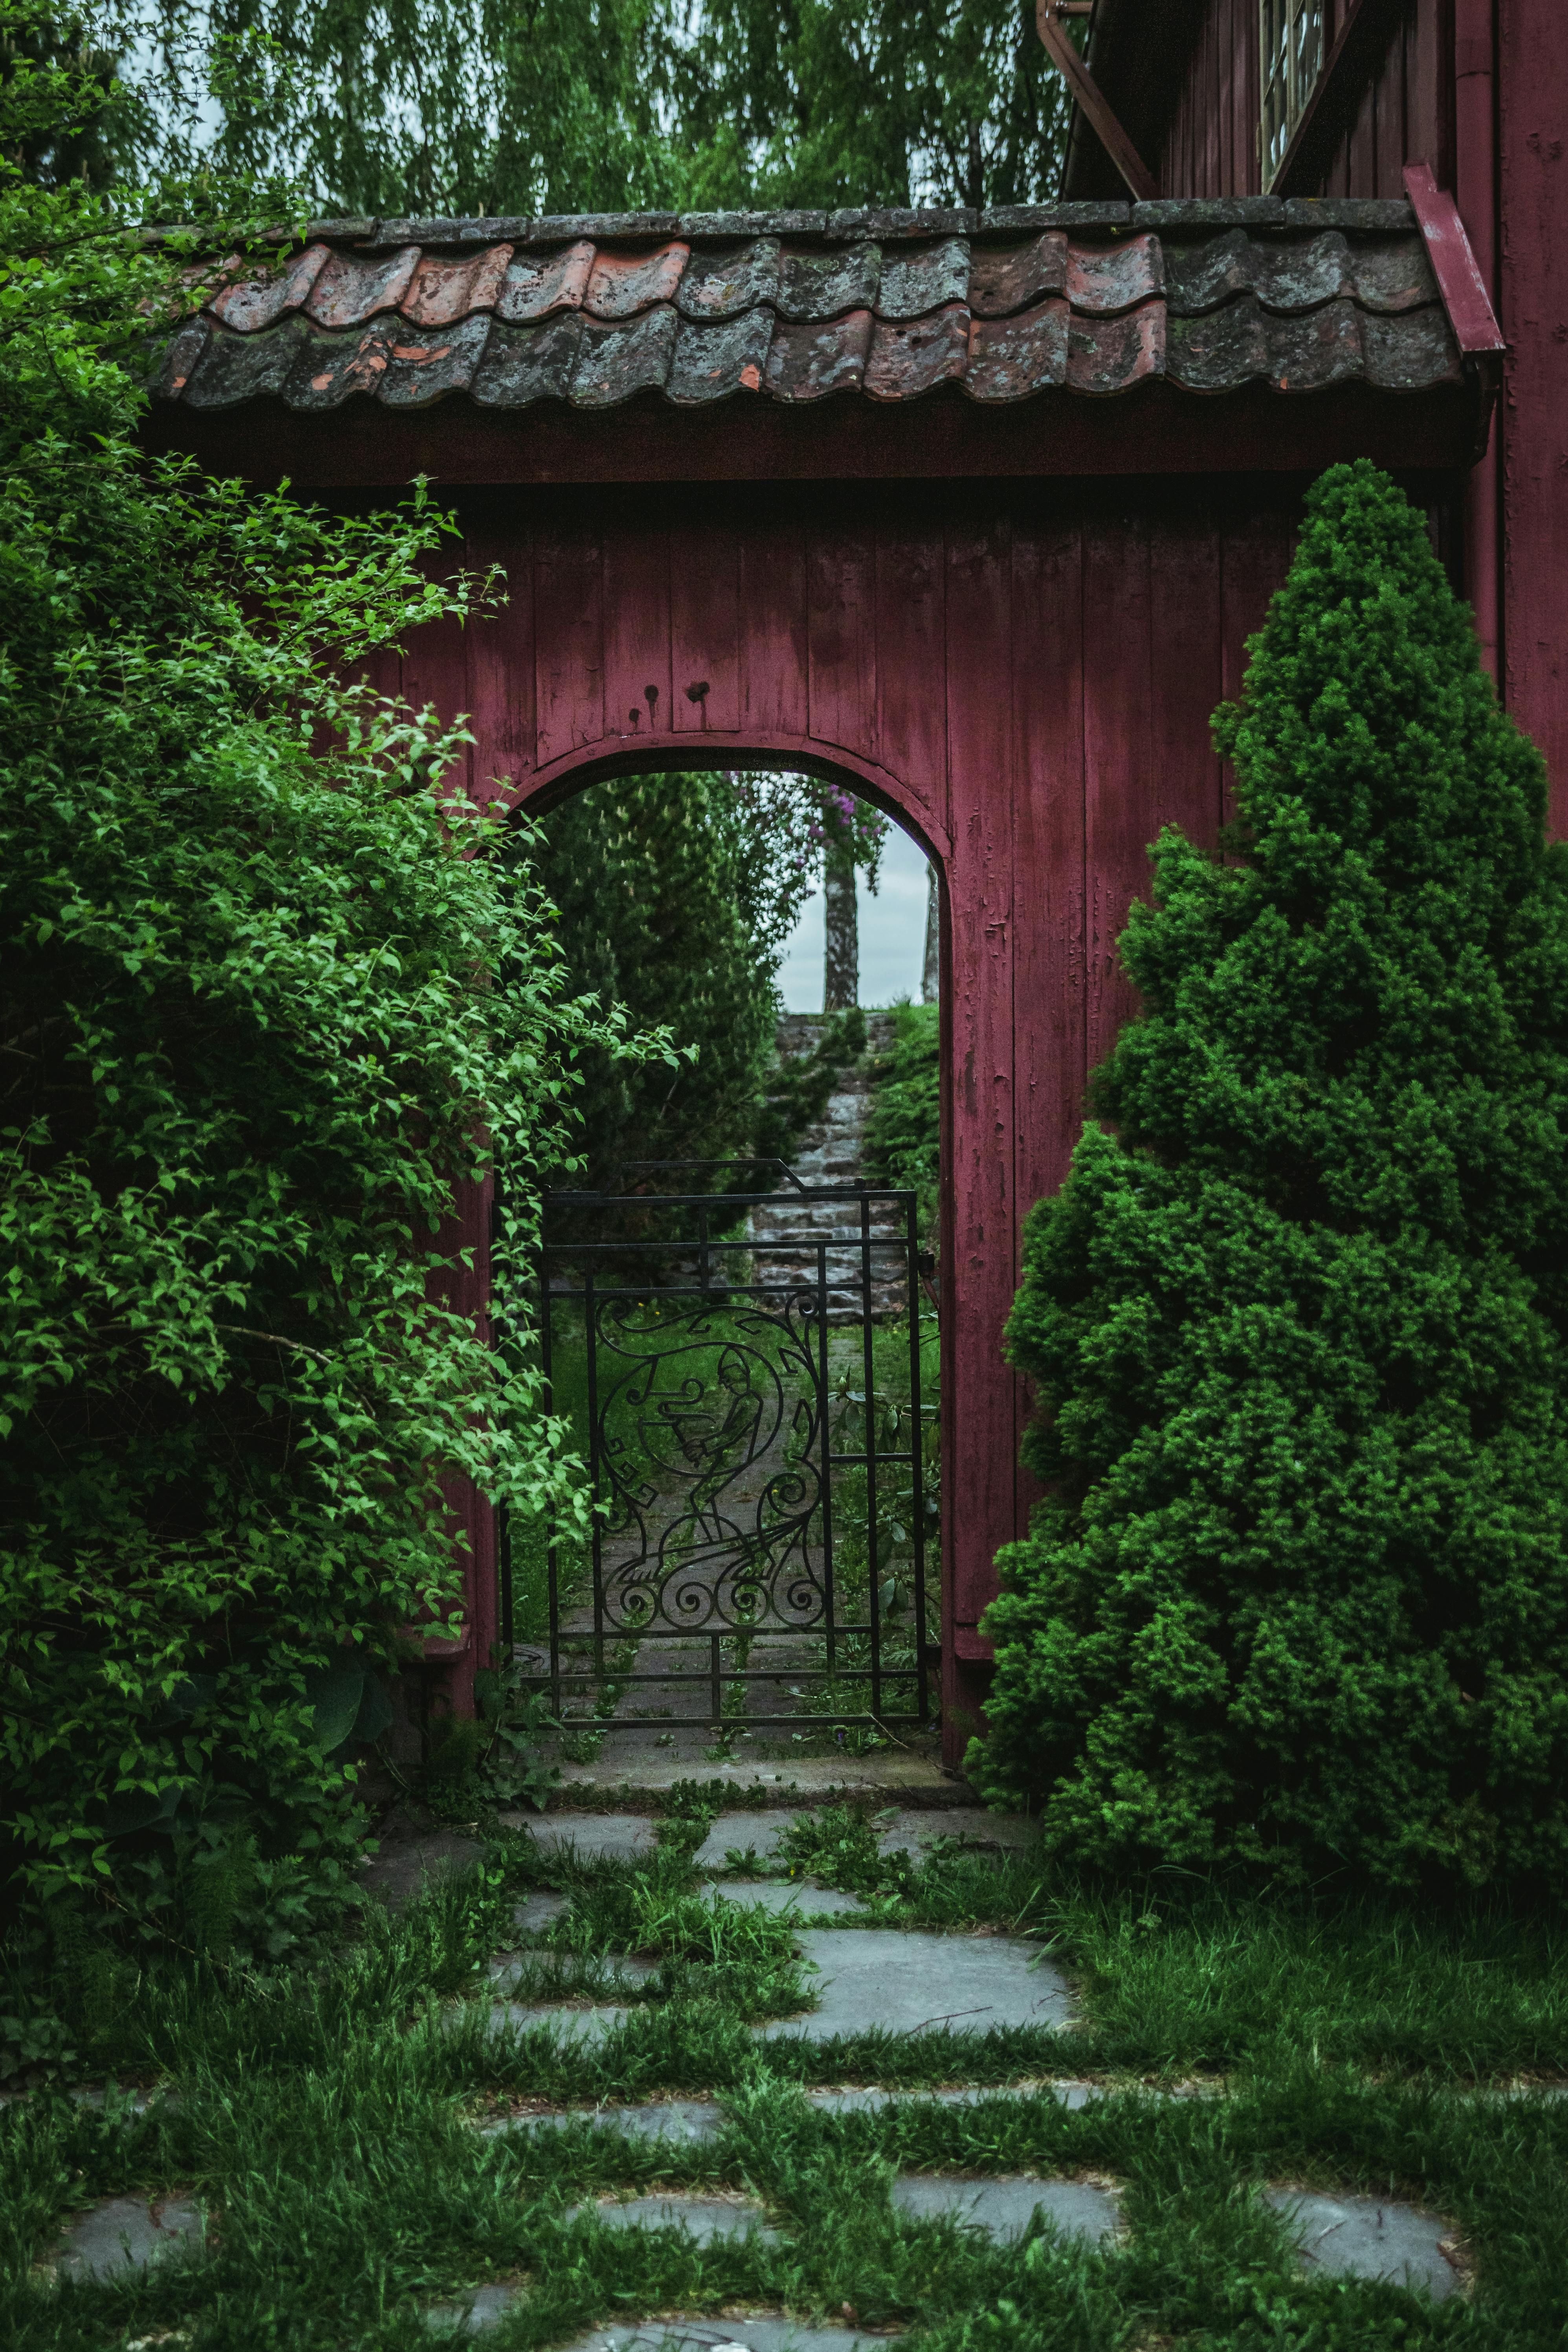 40,000+ Best Garden Background & Images · 100% Free Download · Pexels